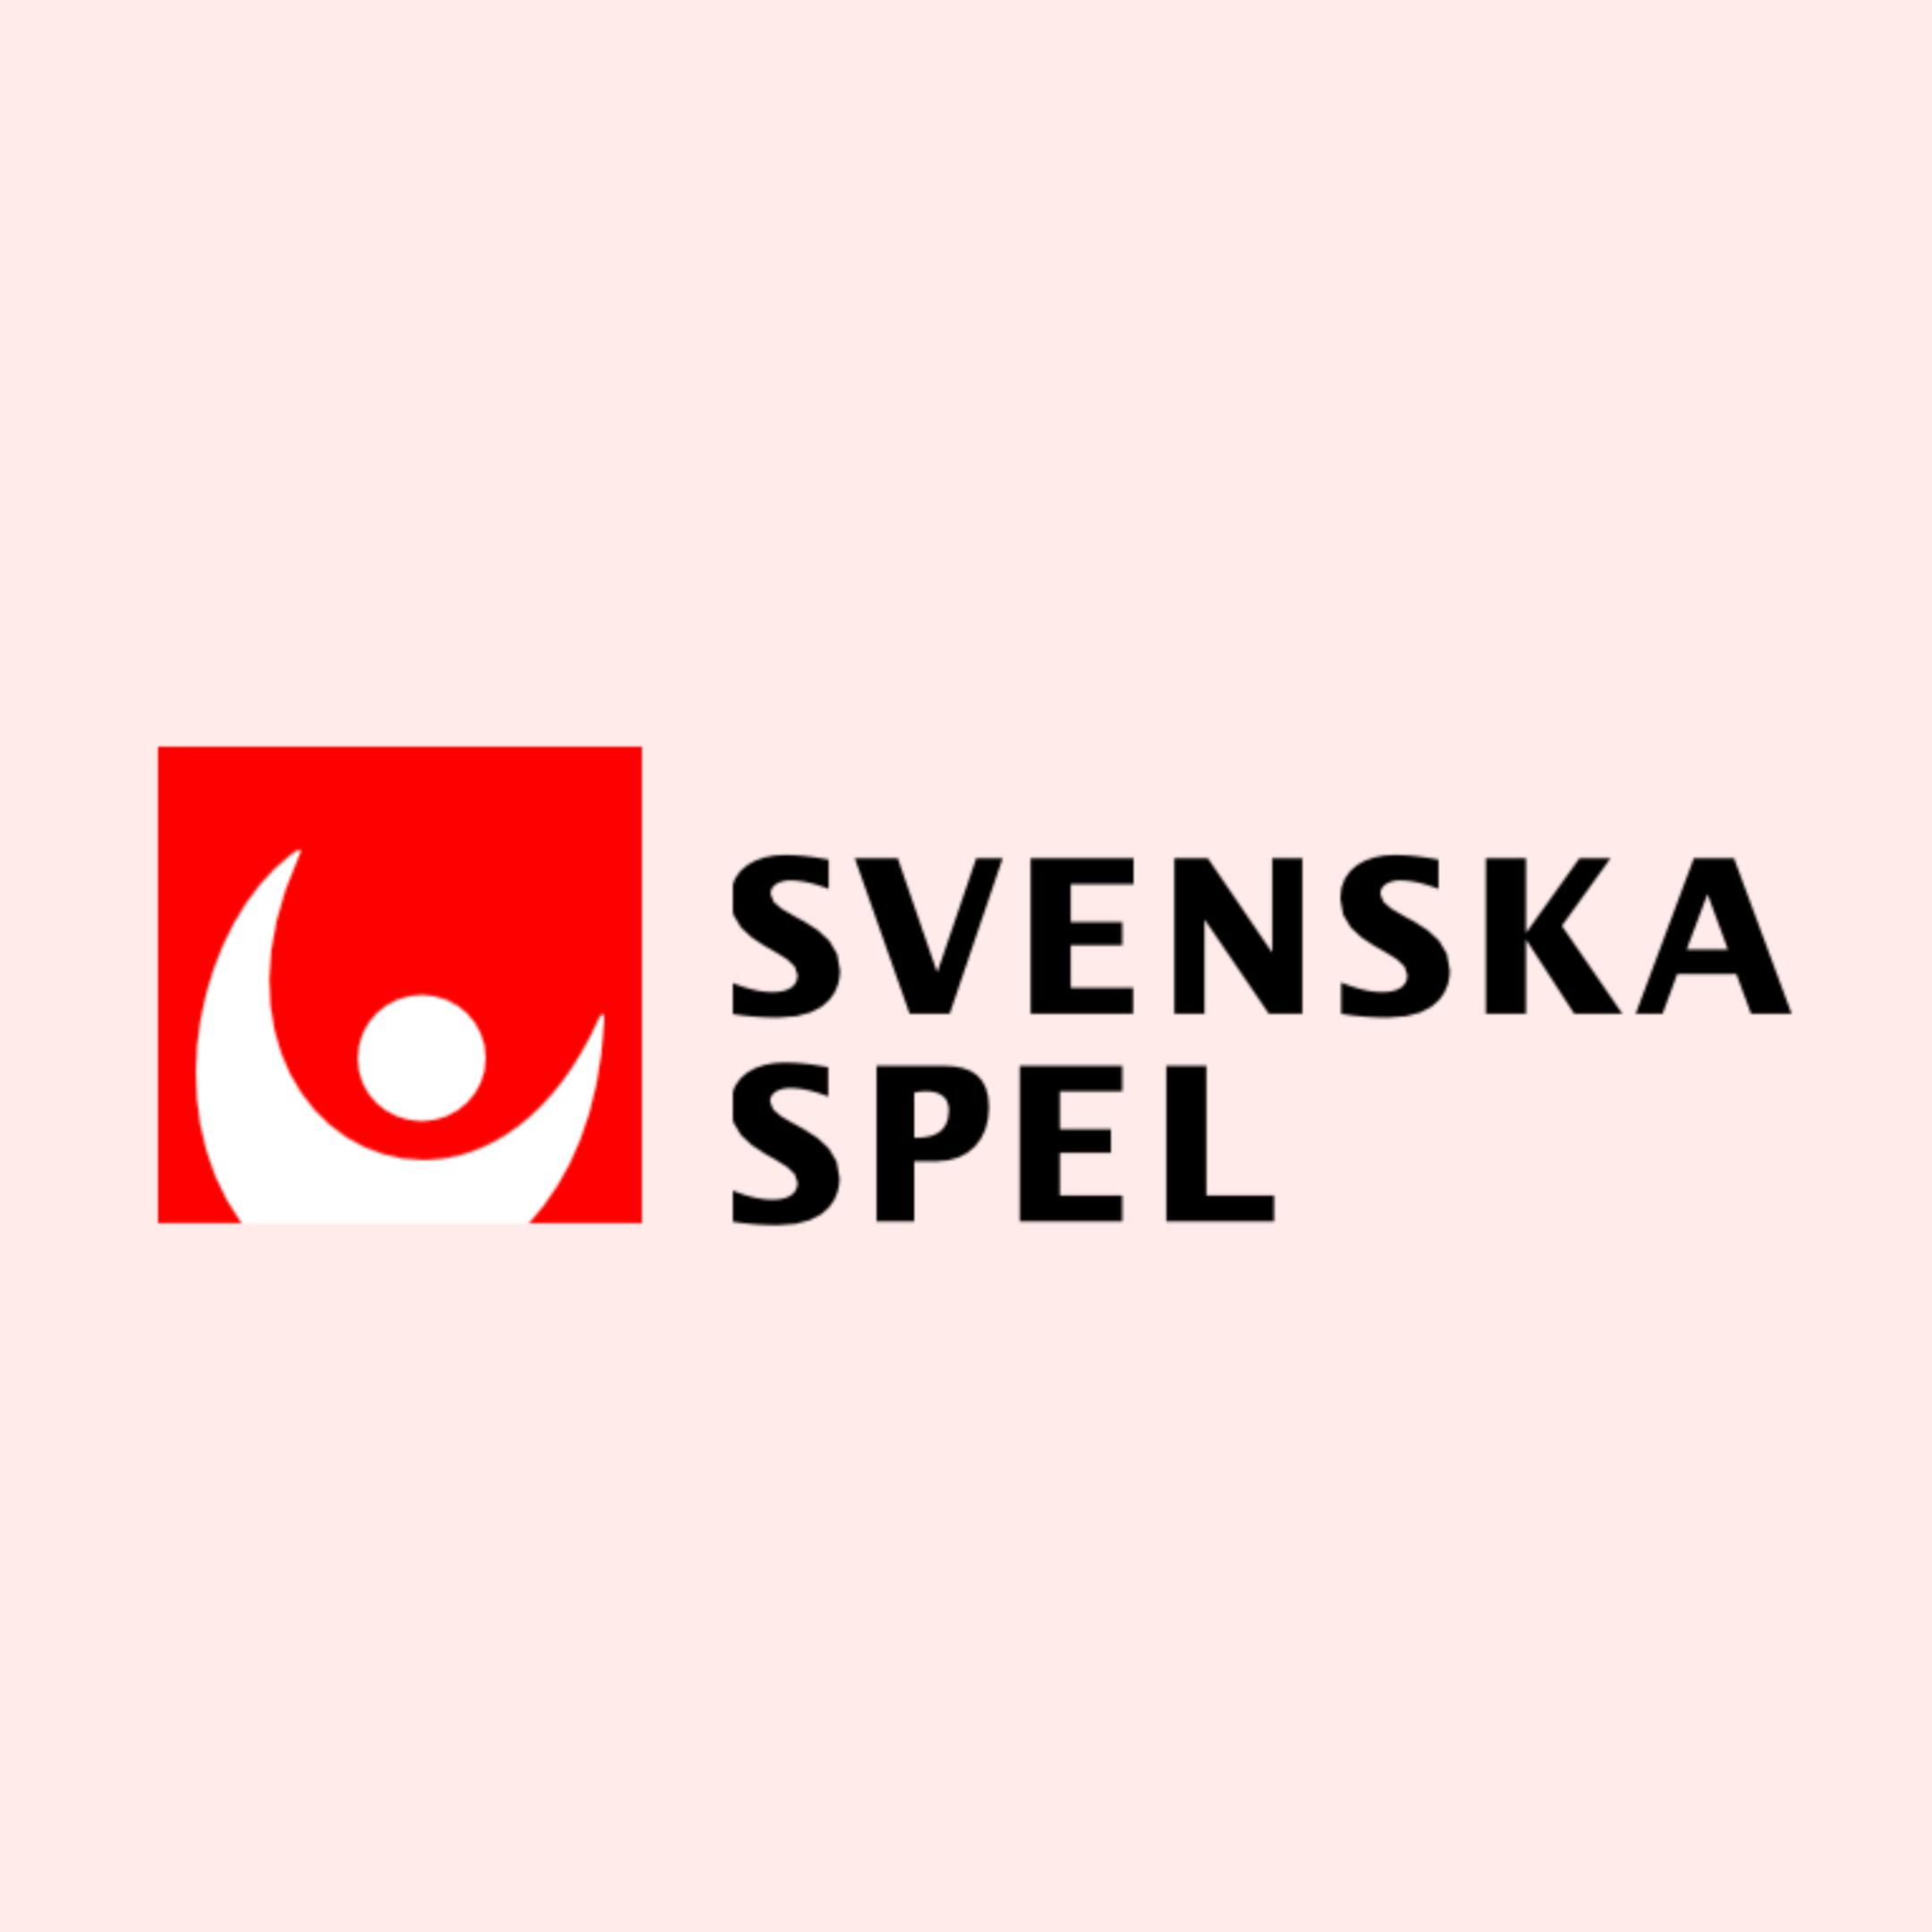 Svenska spel har spellicens i Sverige.